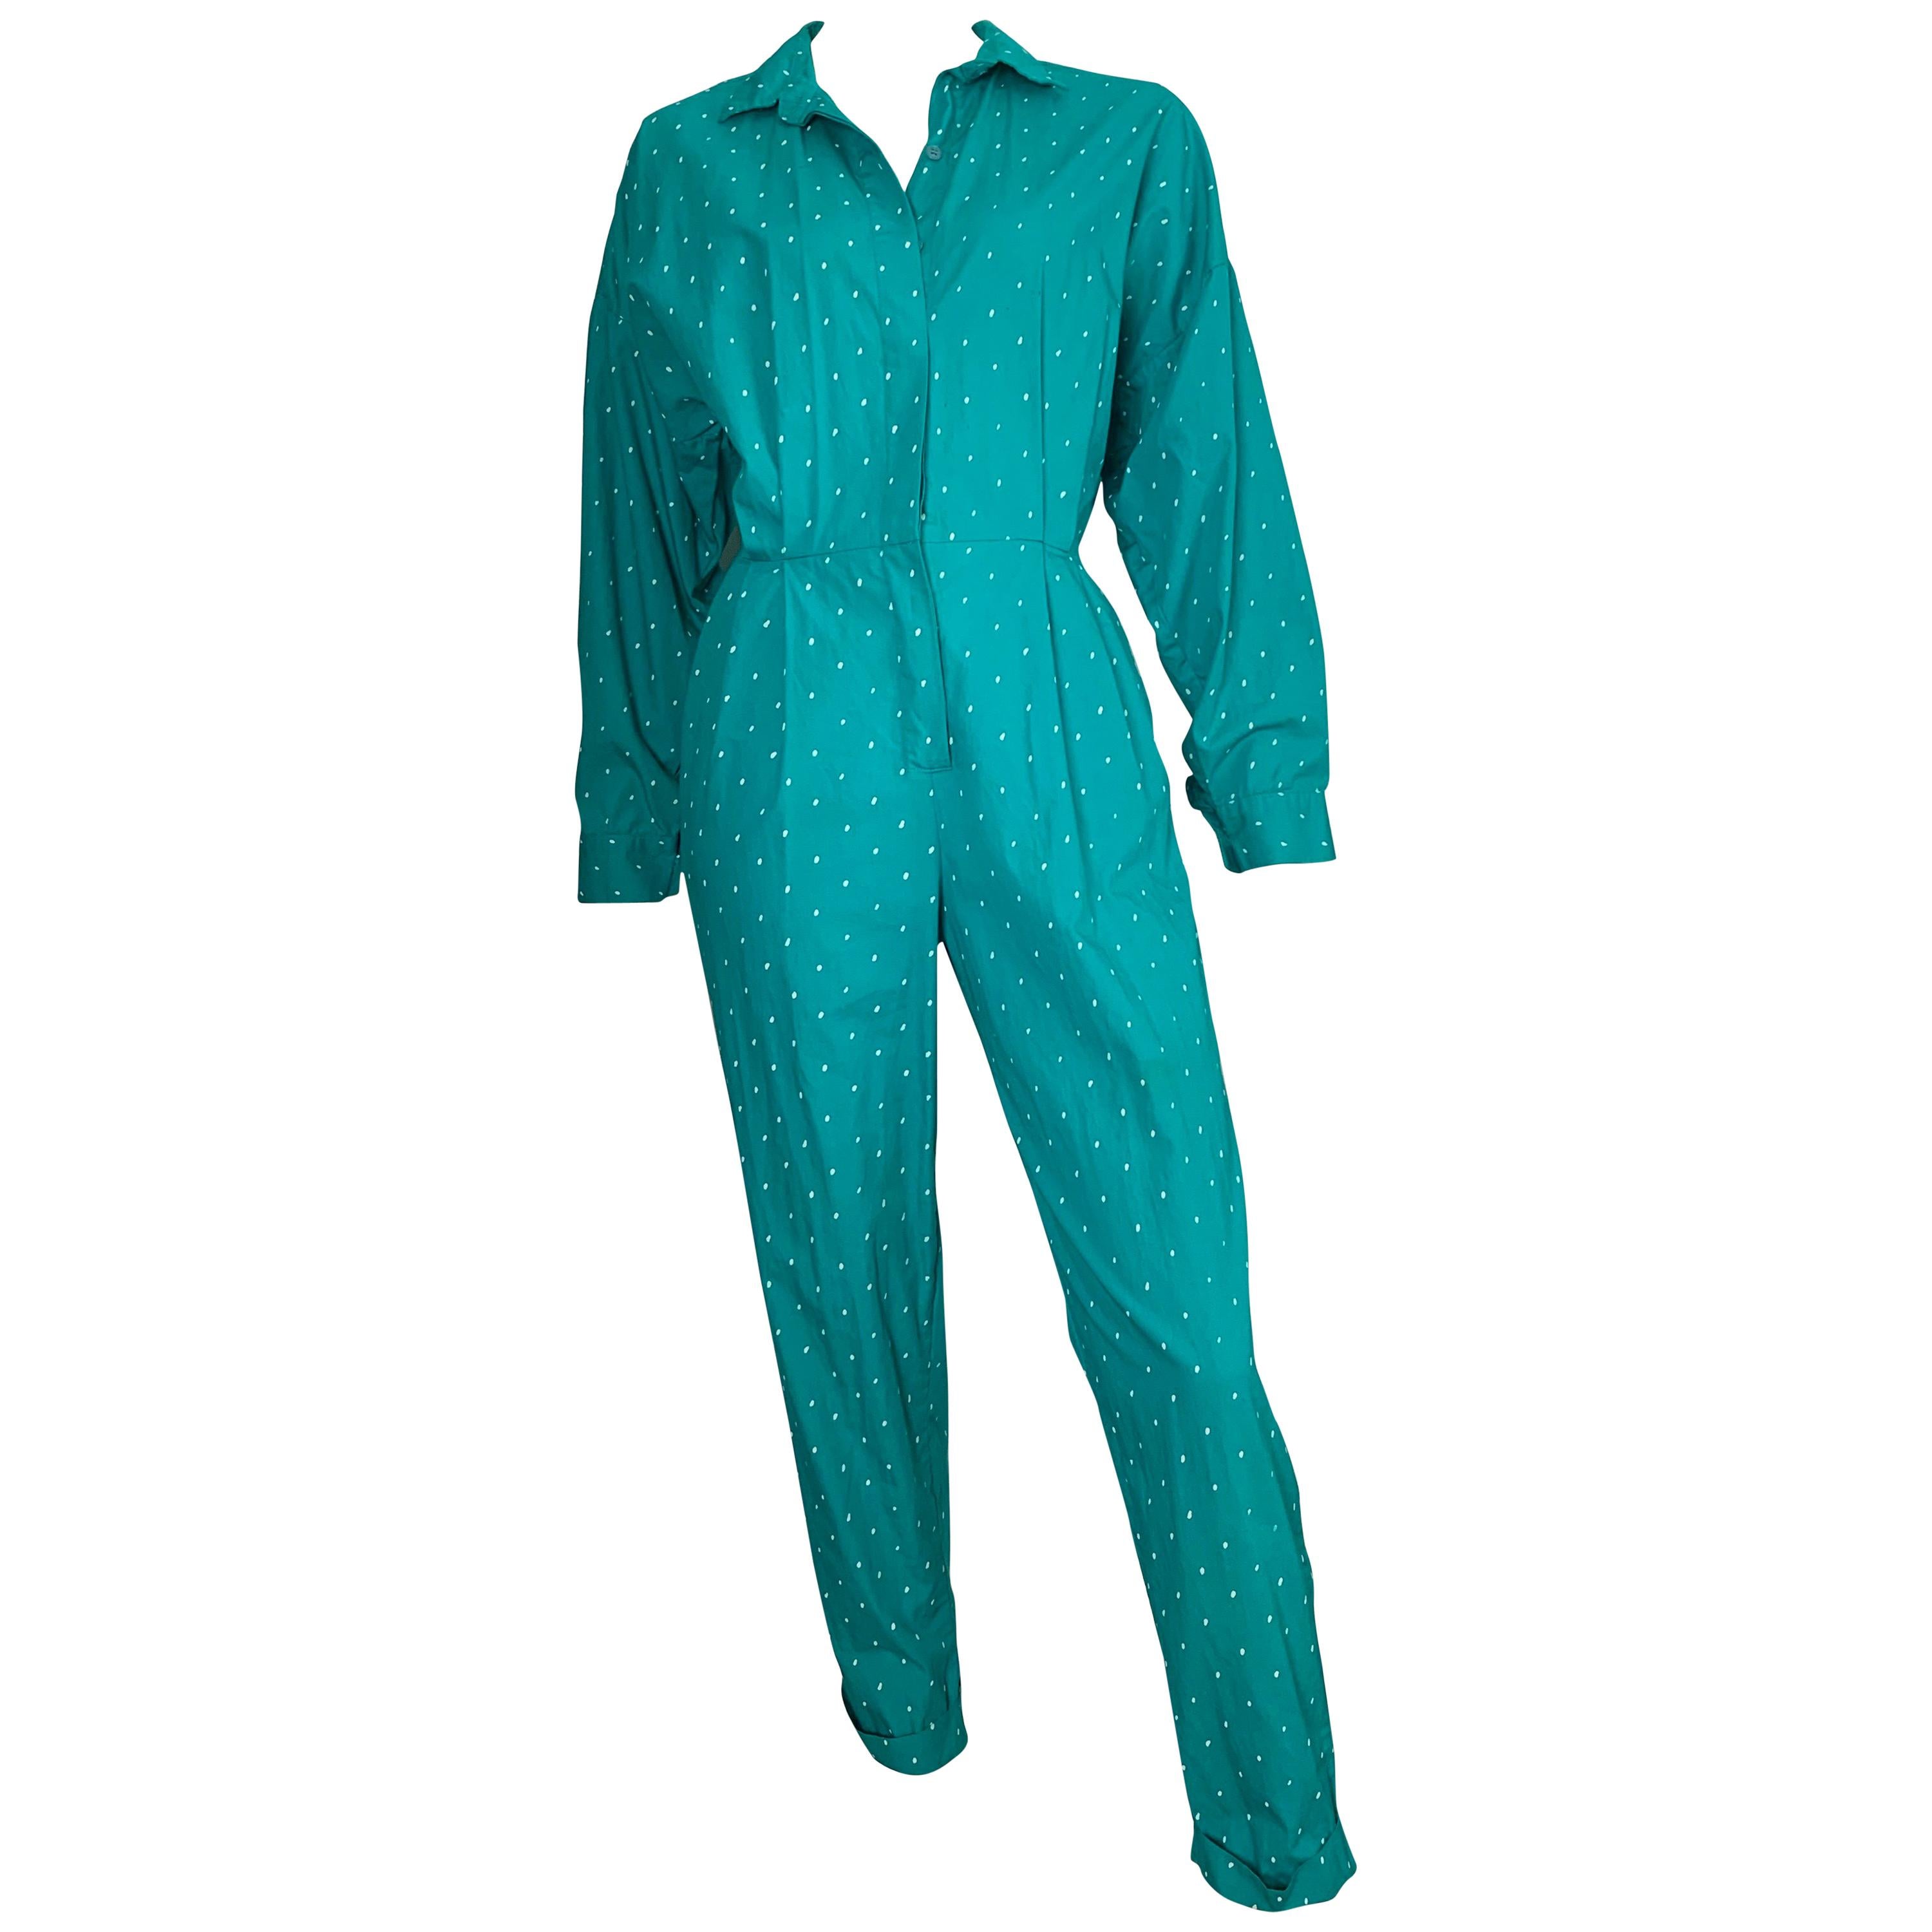 Saint Germain 1980s Cotton Polka Dot Jumpsuit with Pockets Size 4. 